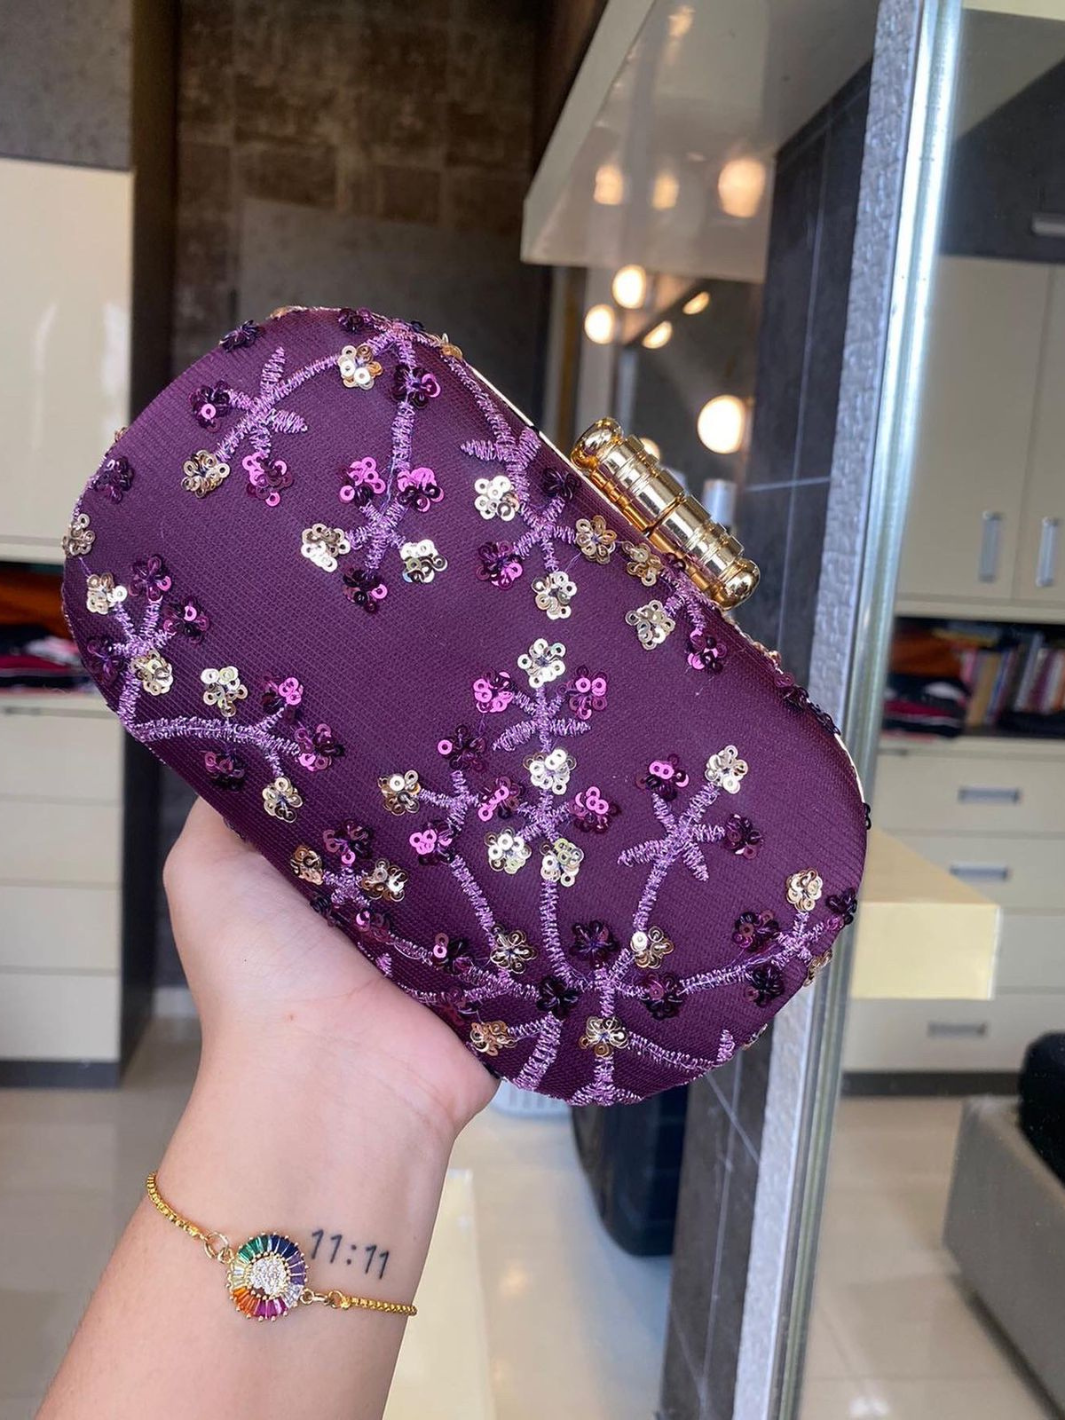 Handmade purple clutch bag